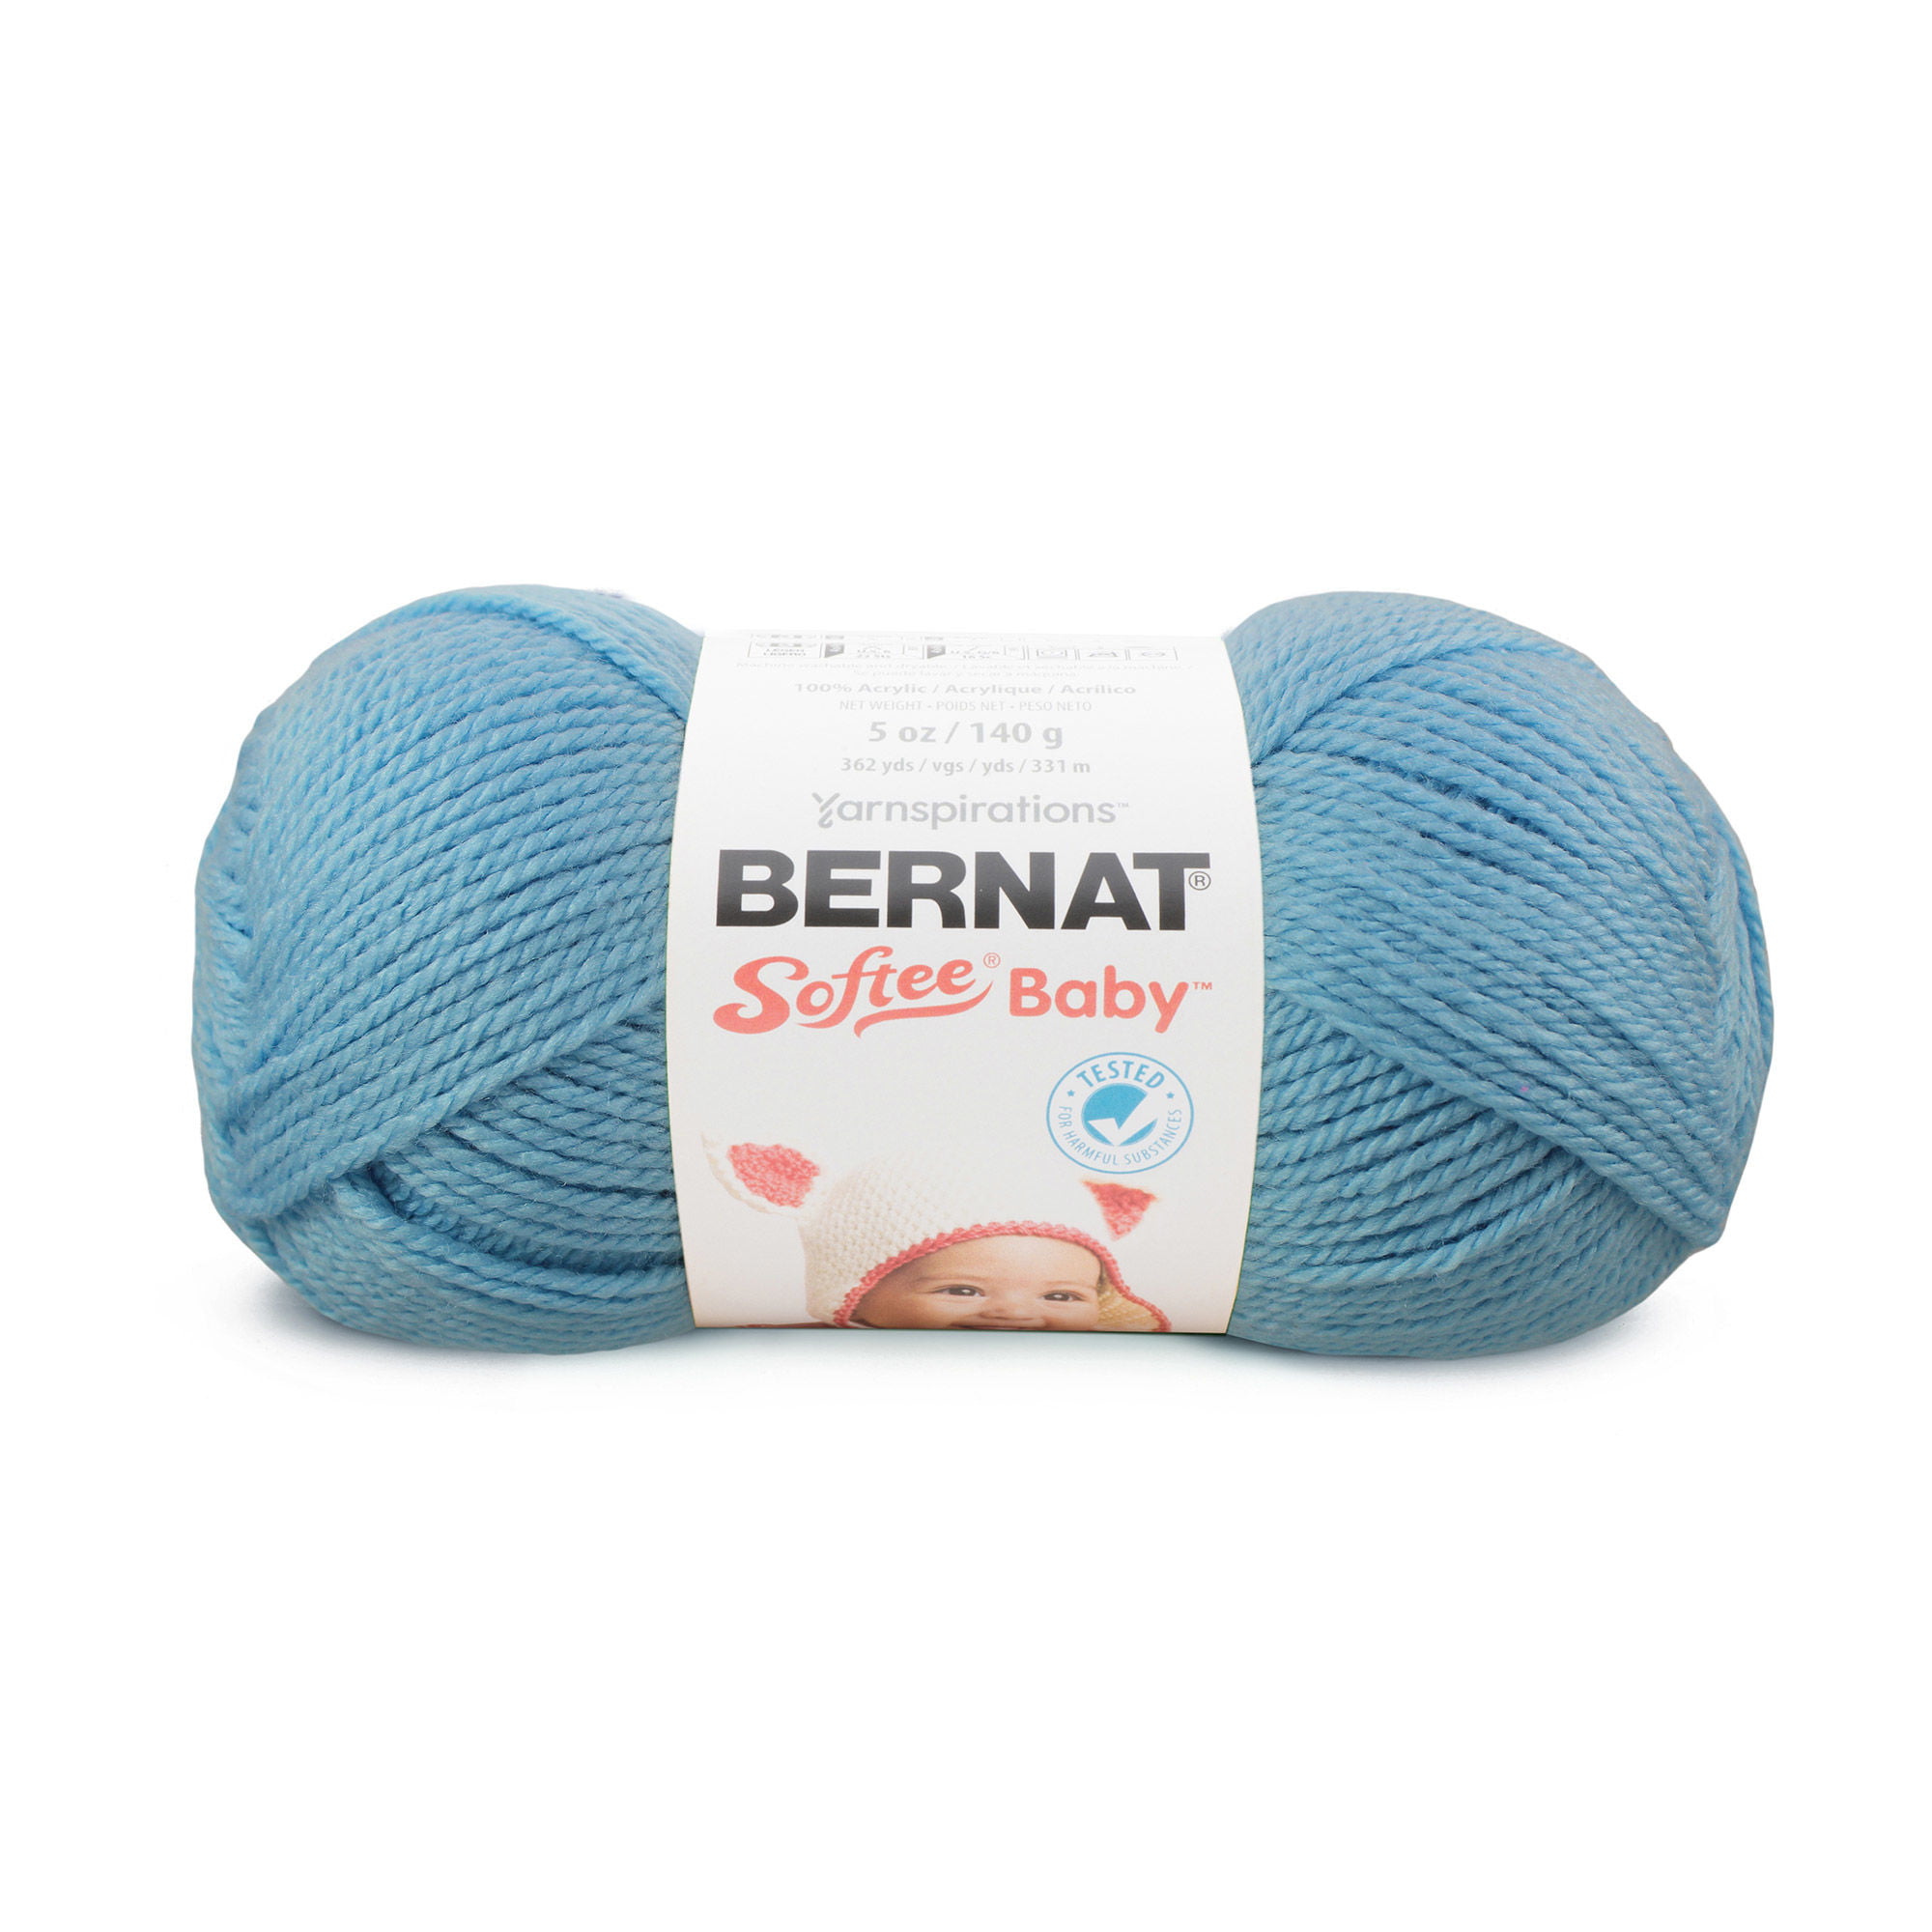 Bernat Softee Baby Yarn - Solids-Soft Peach, 1 count - Kroger